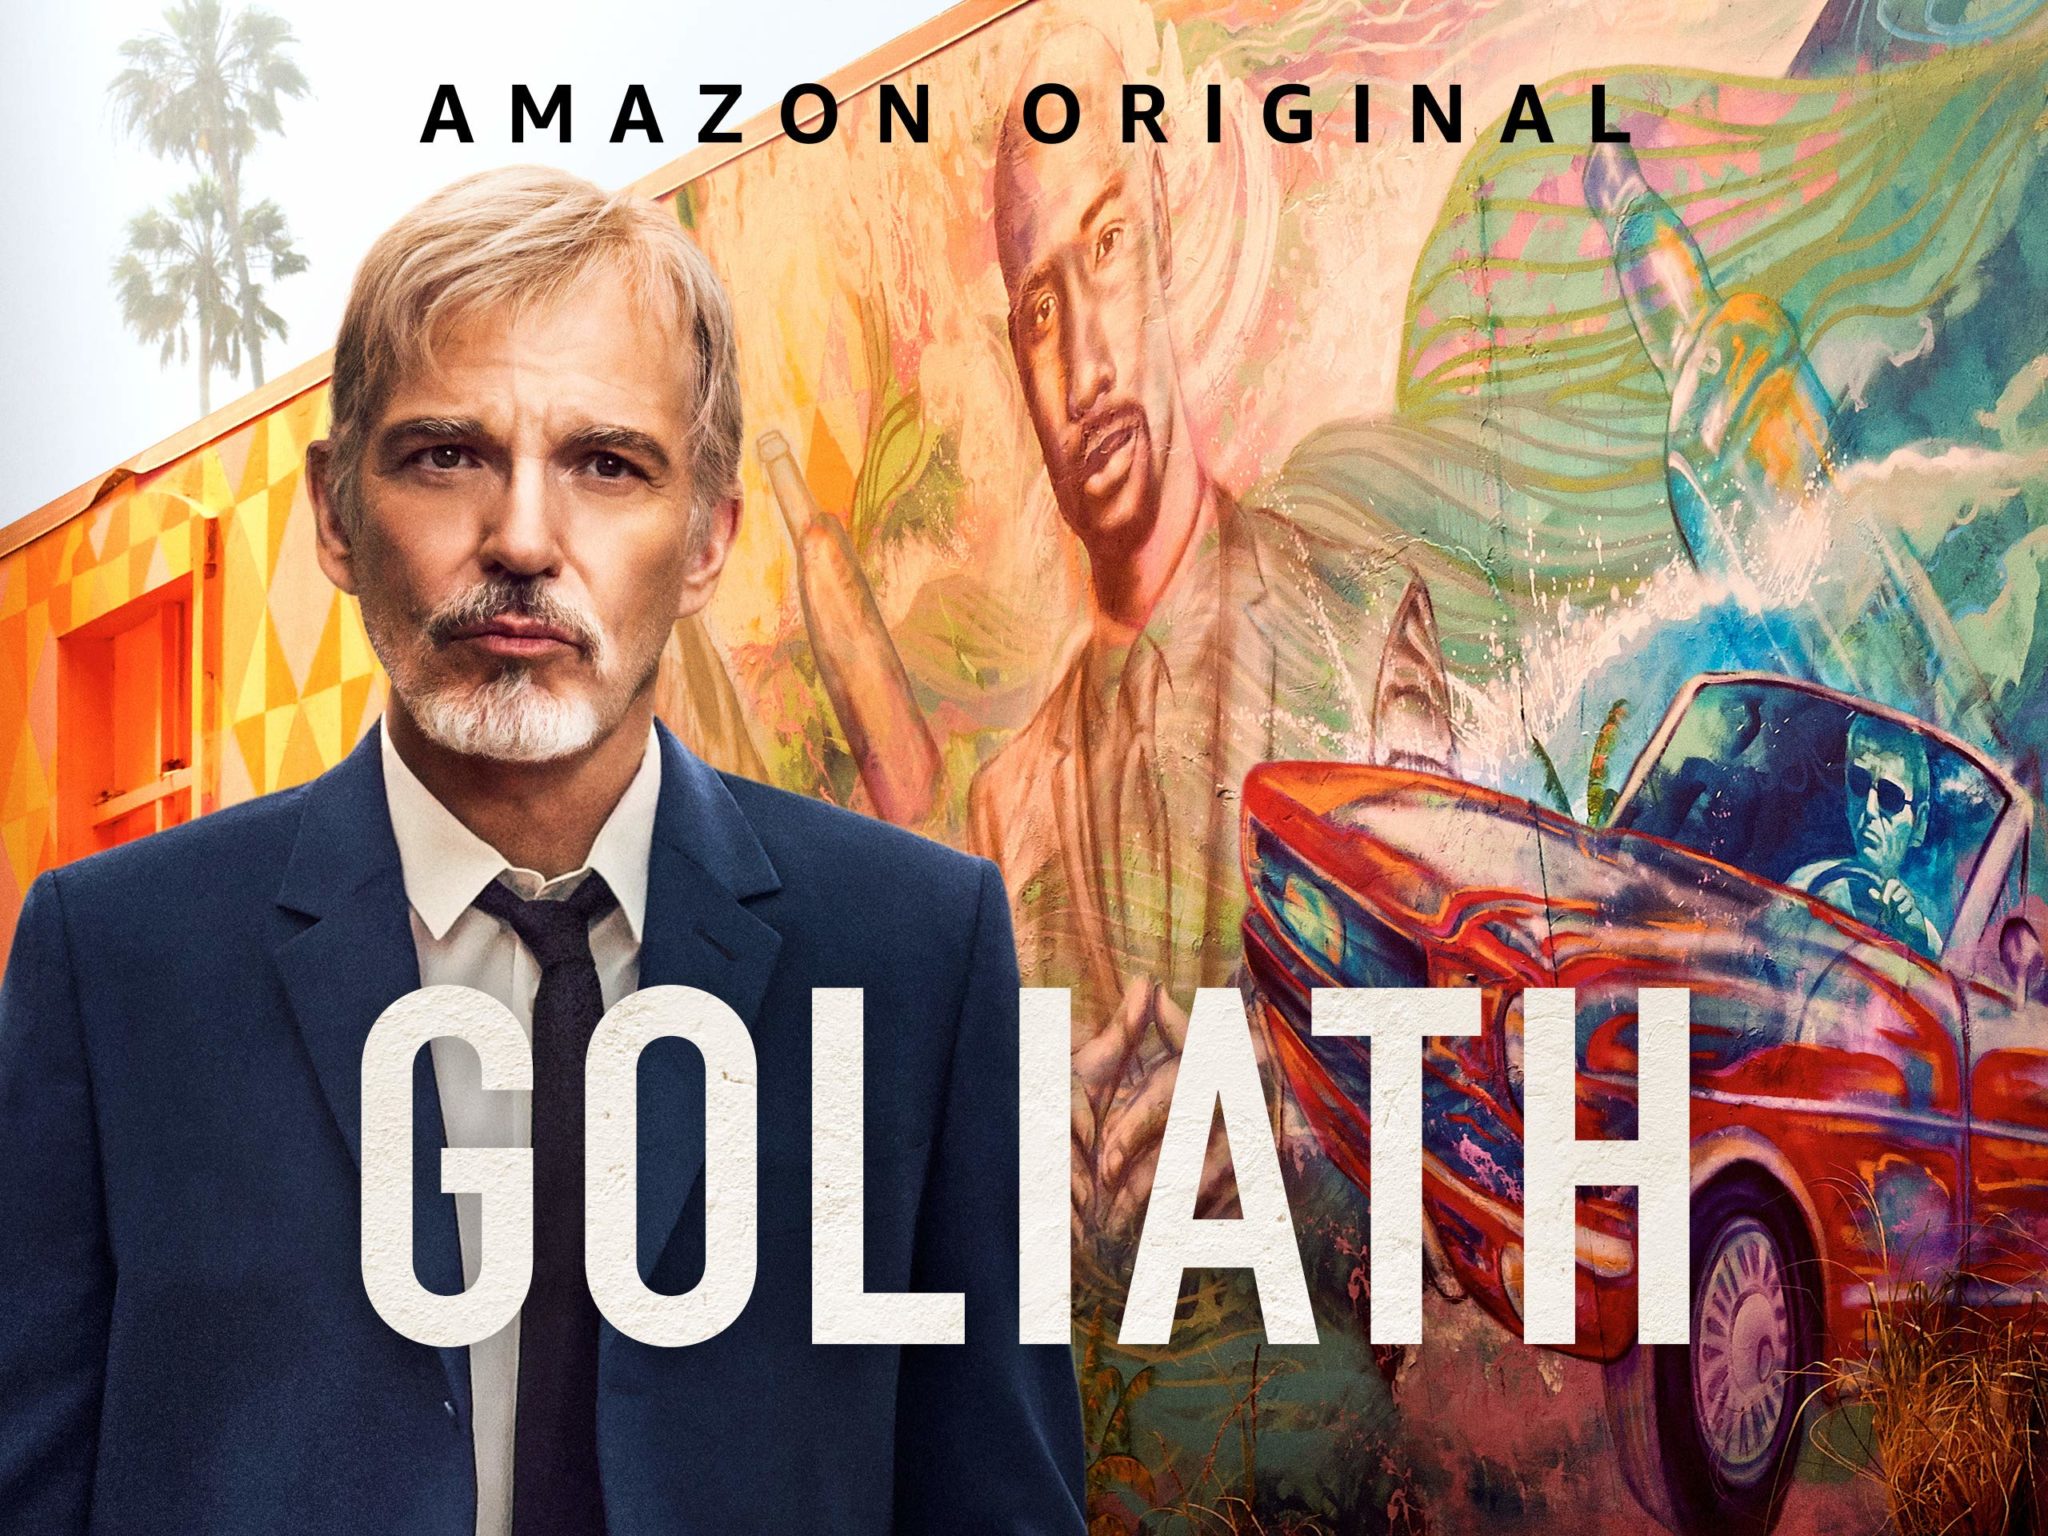 Amazon Prime's Goliath